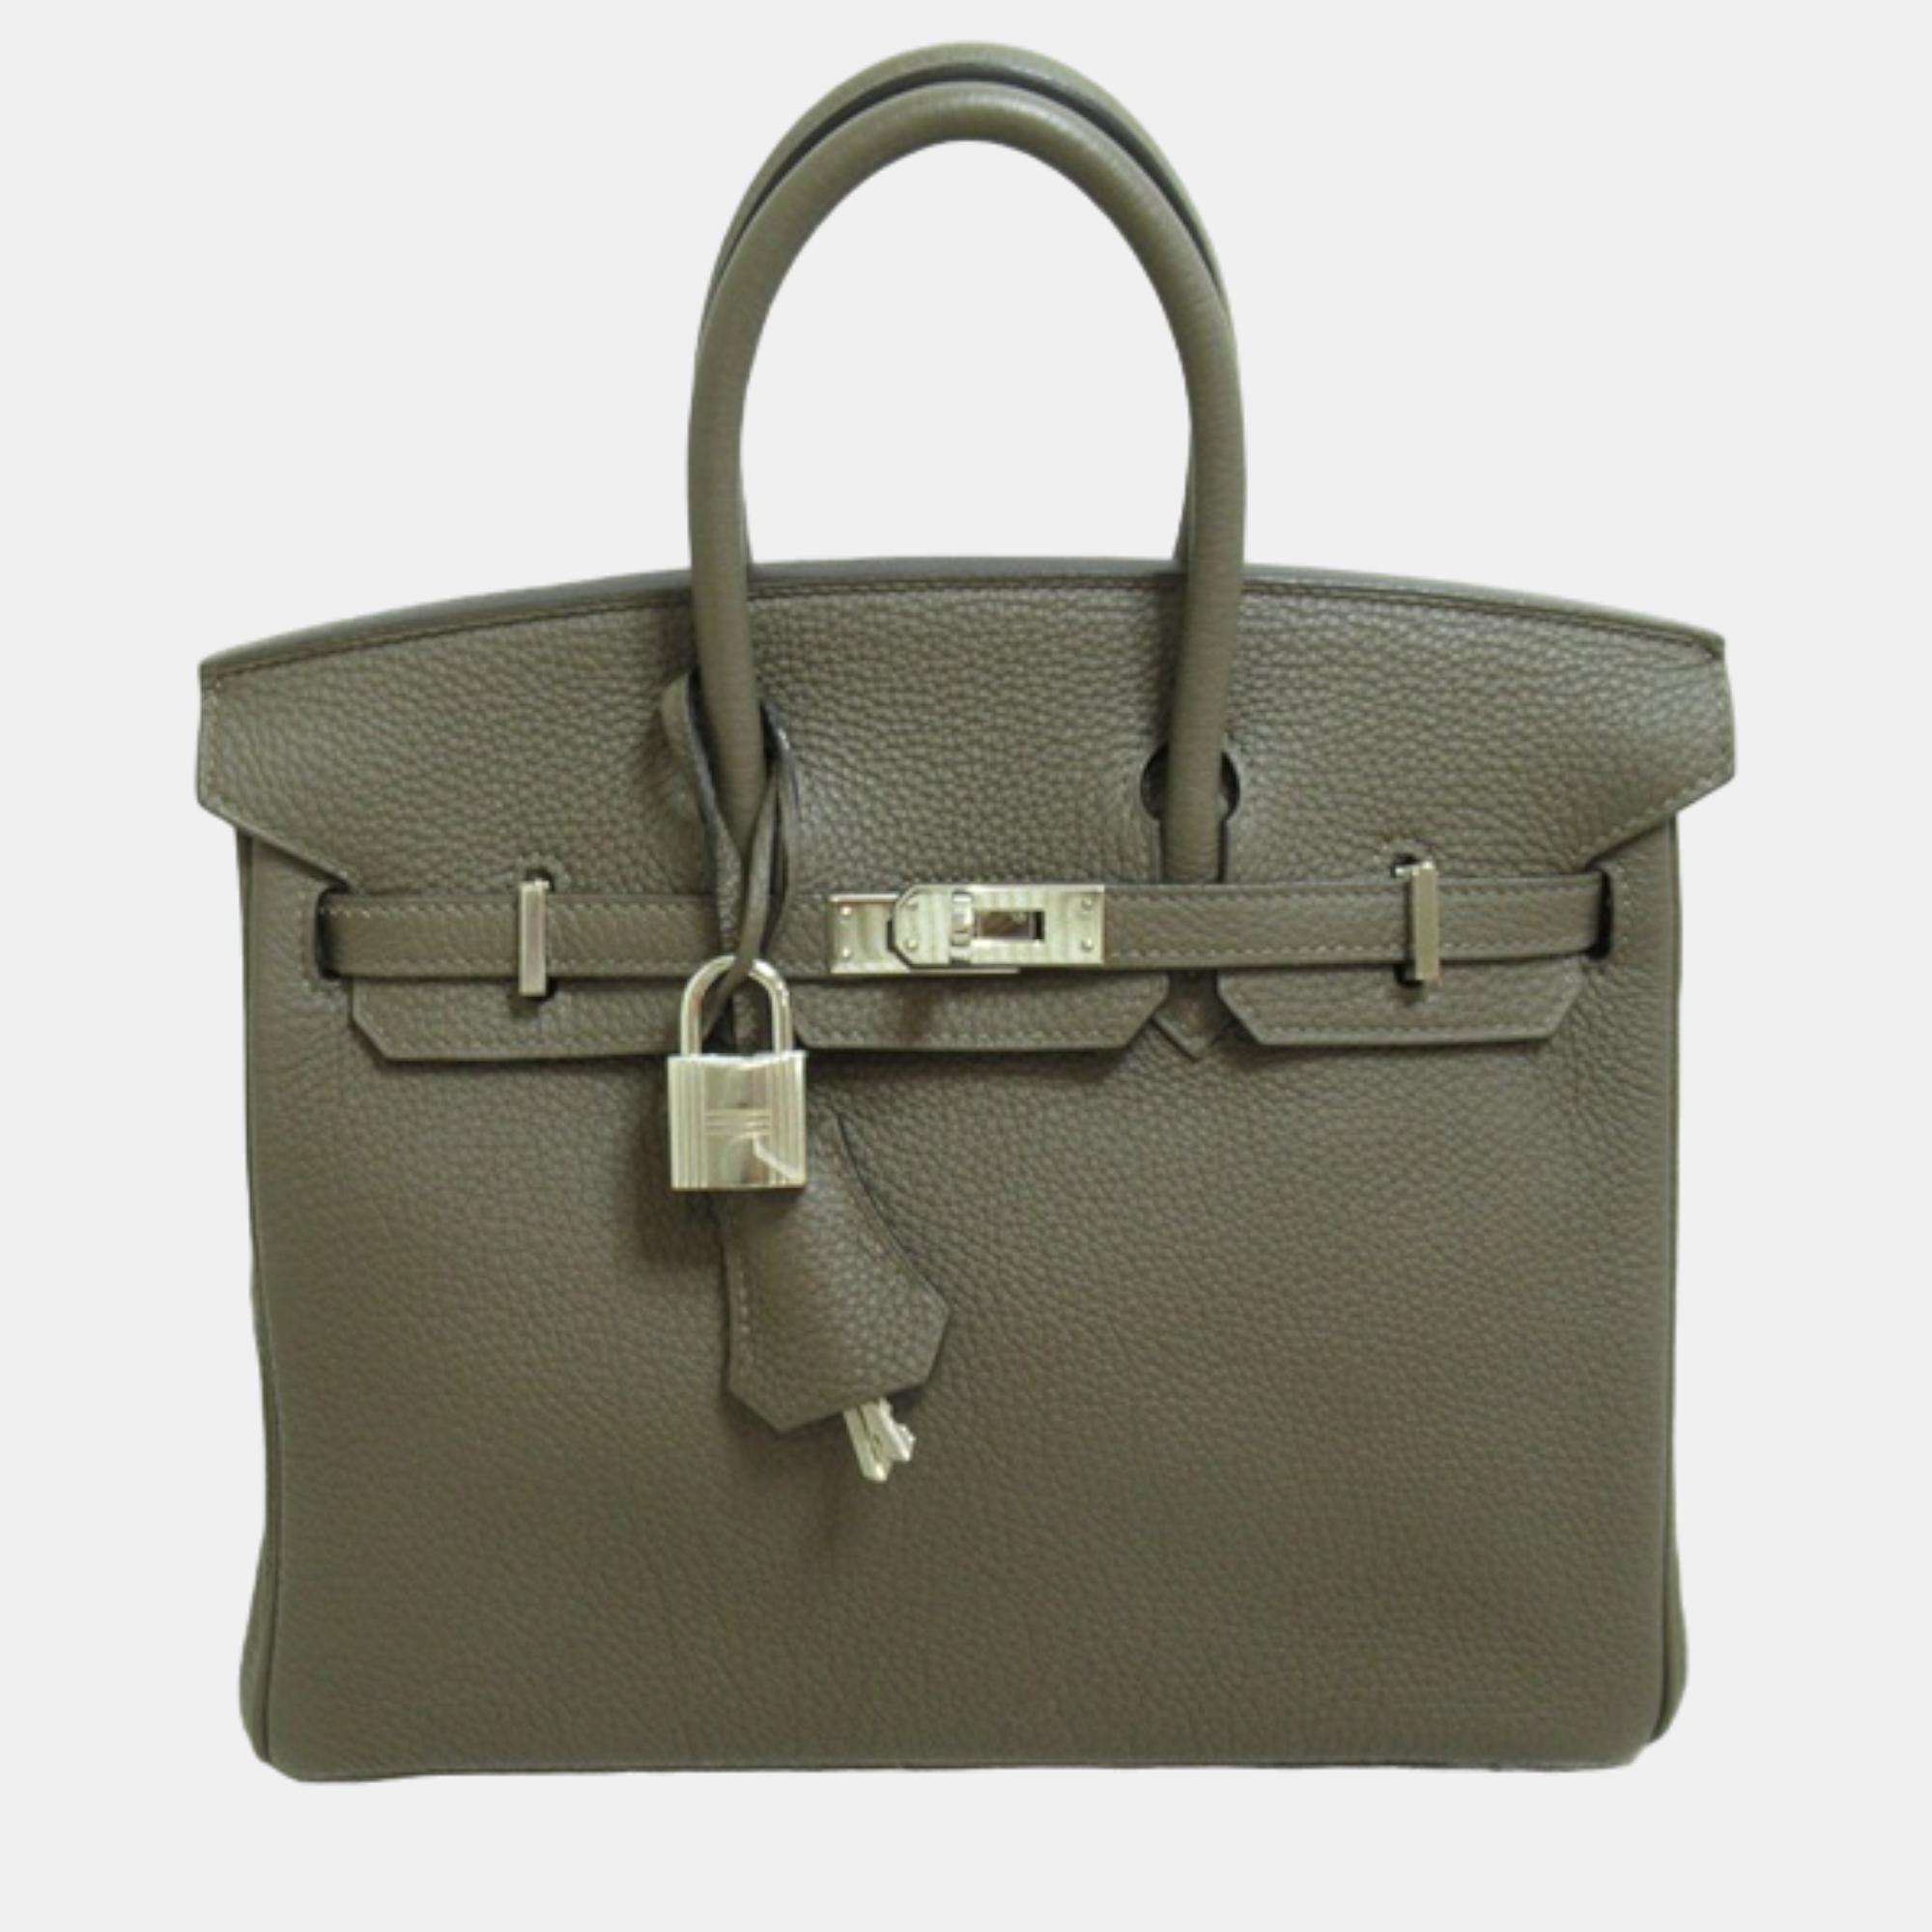 Pre-owned Hermes Grey Togo Leather Birkin 25 Tote Bag